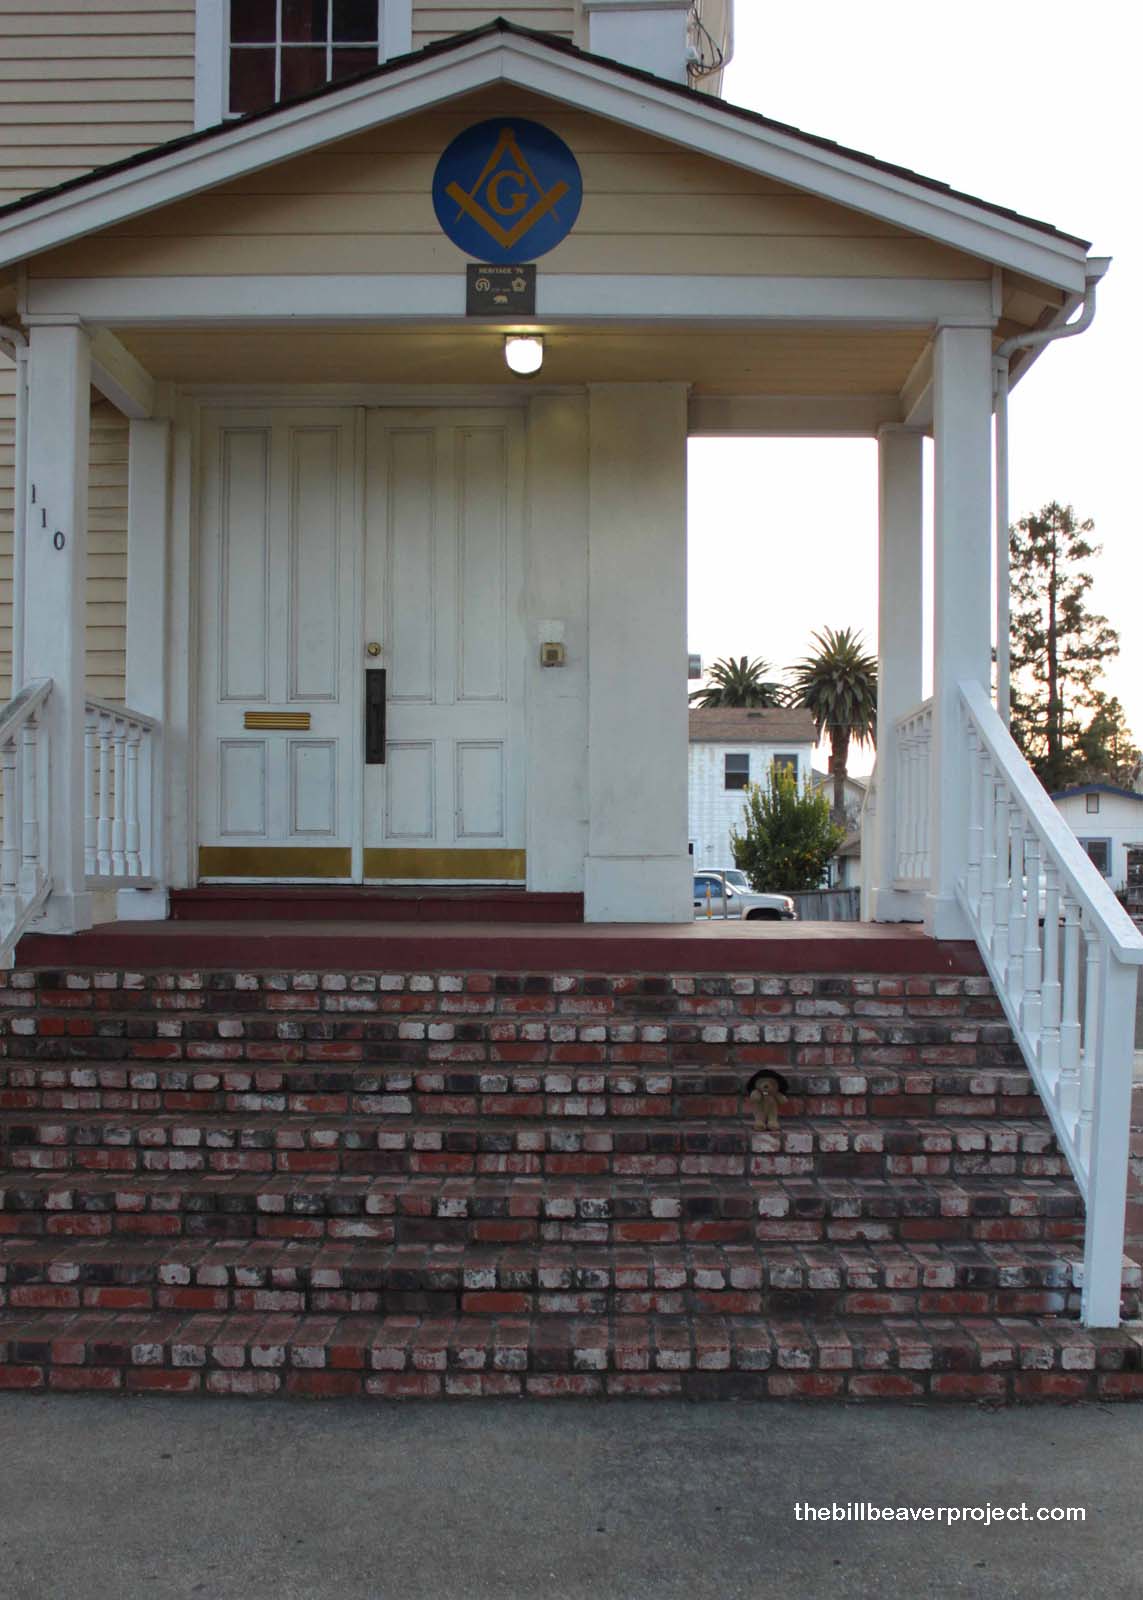 First Masonic Hall Built in California